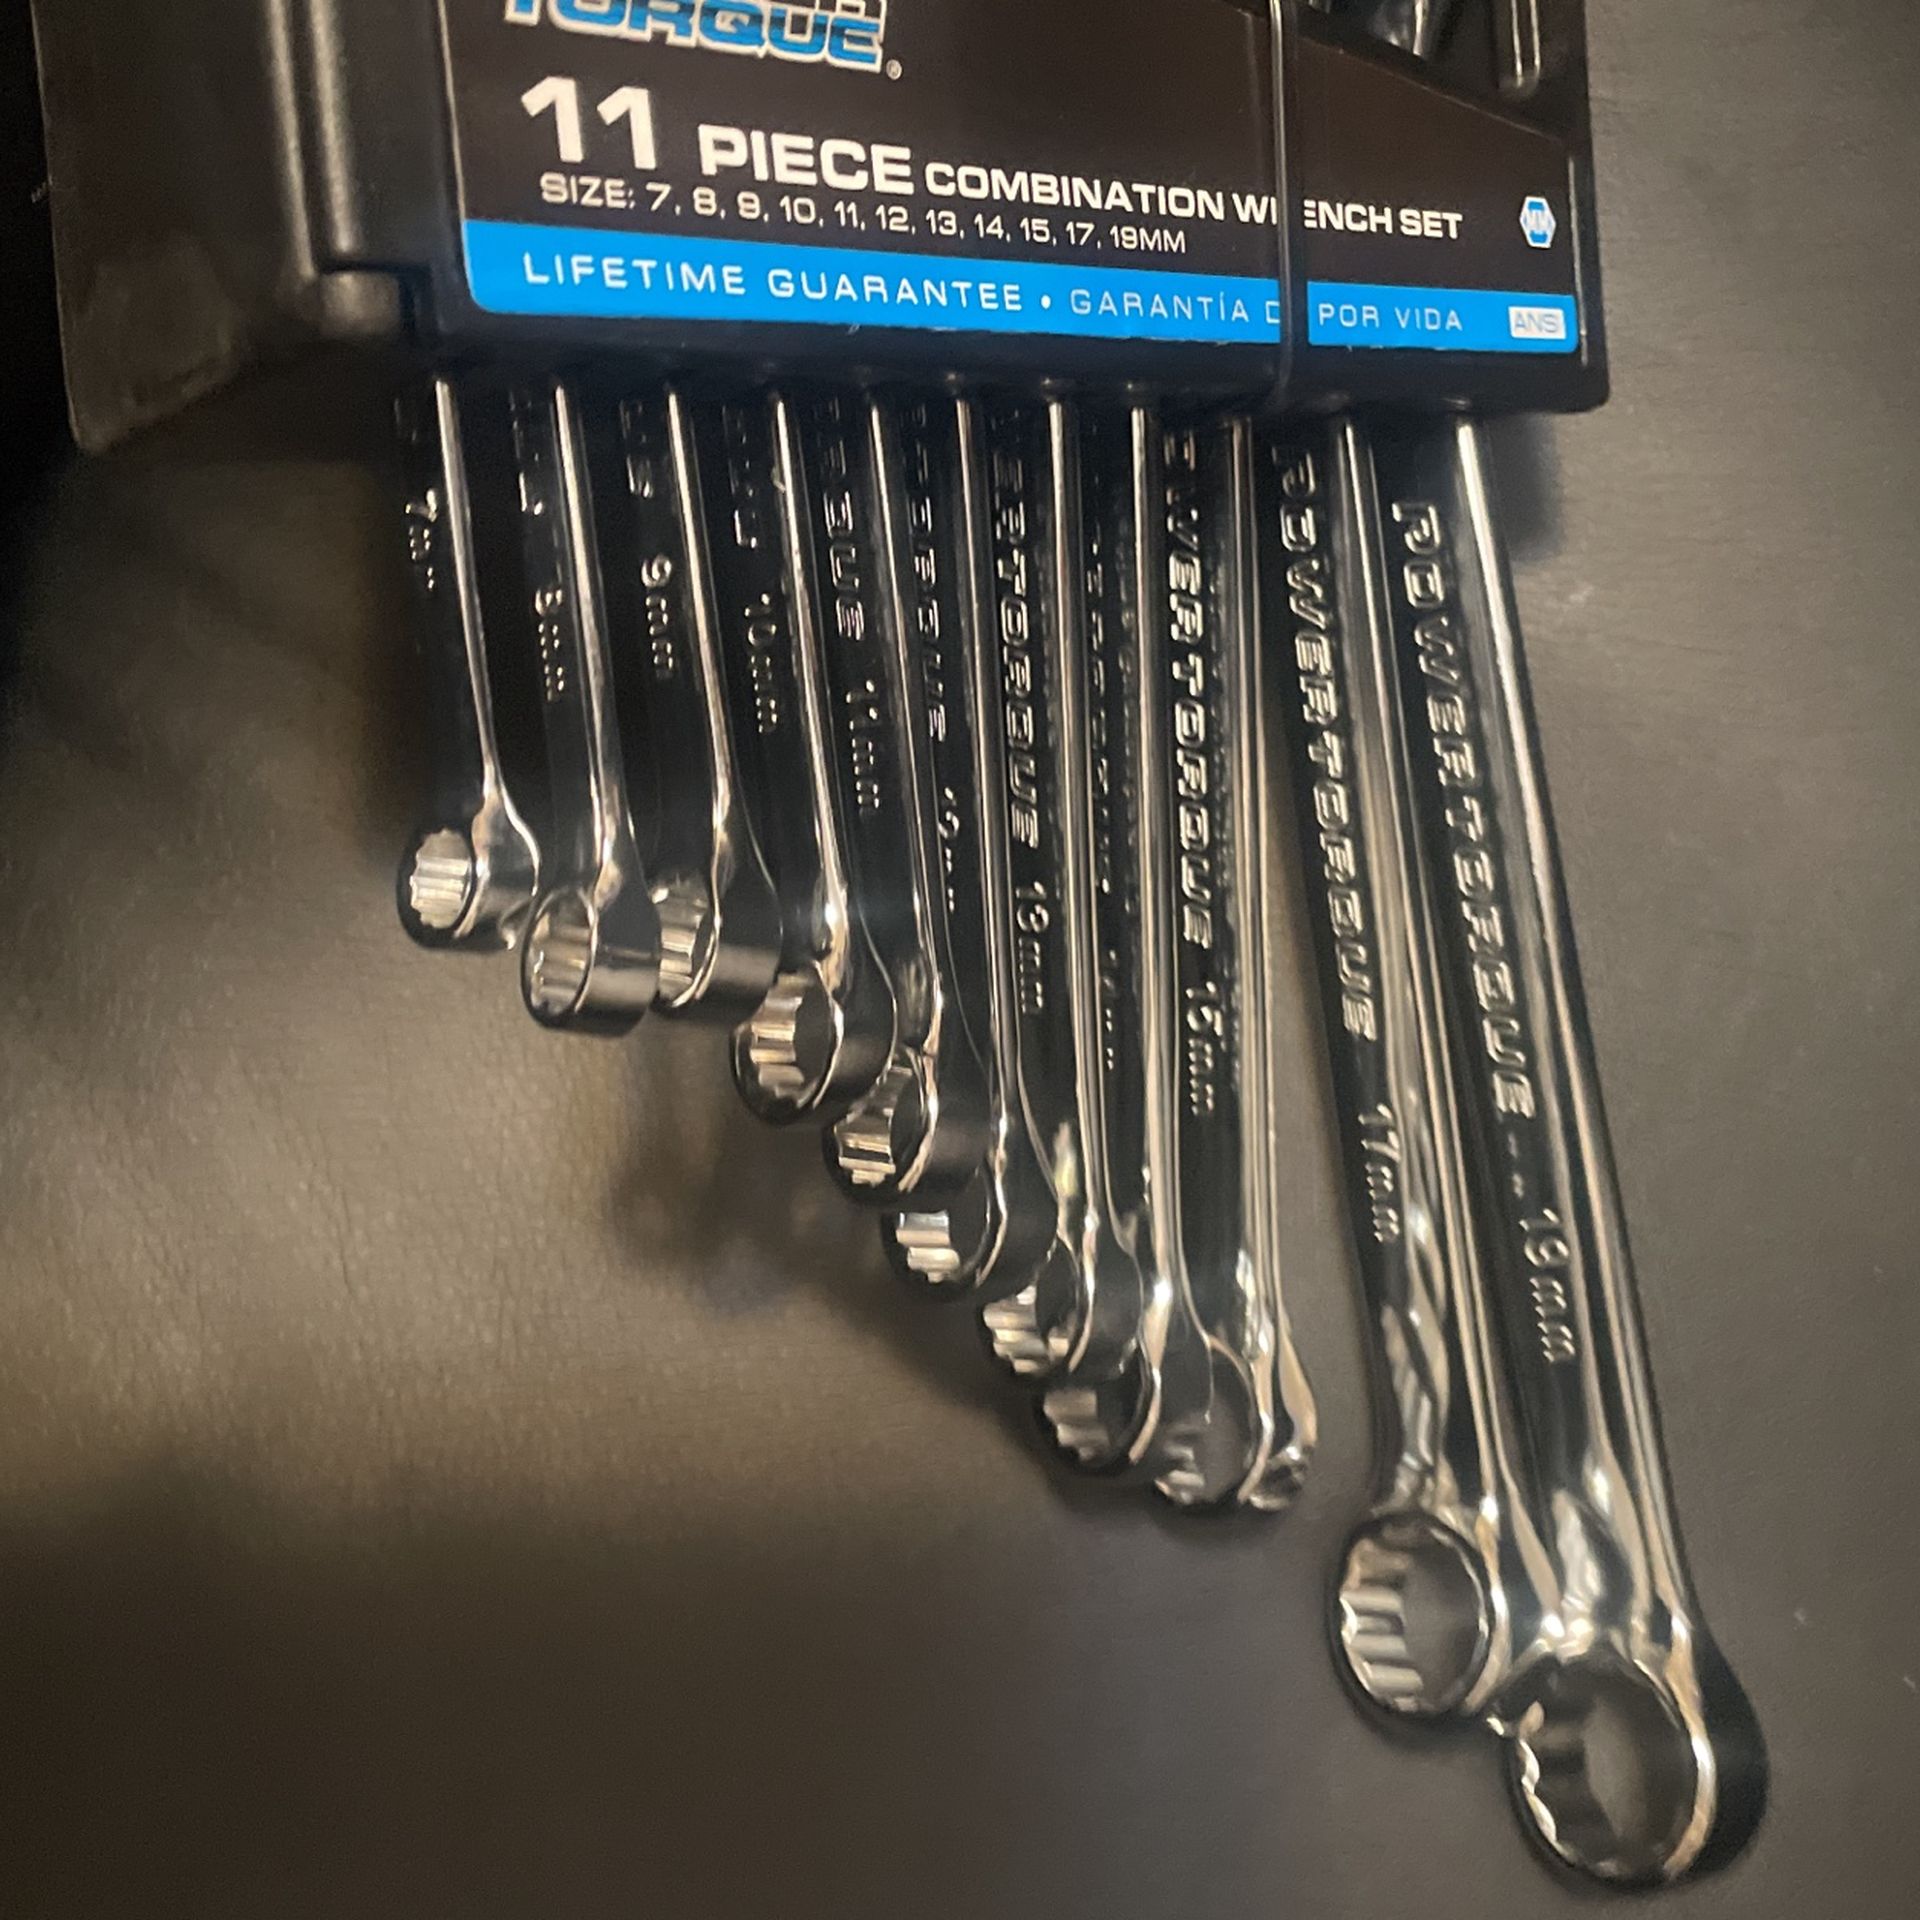 11 Piece Combination Wrench Set Lifetime Warranty 